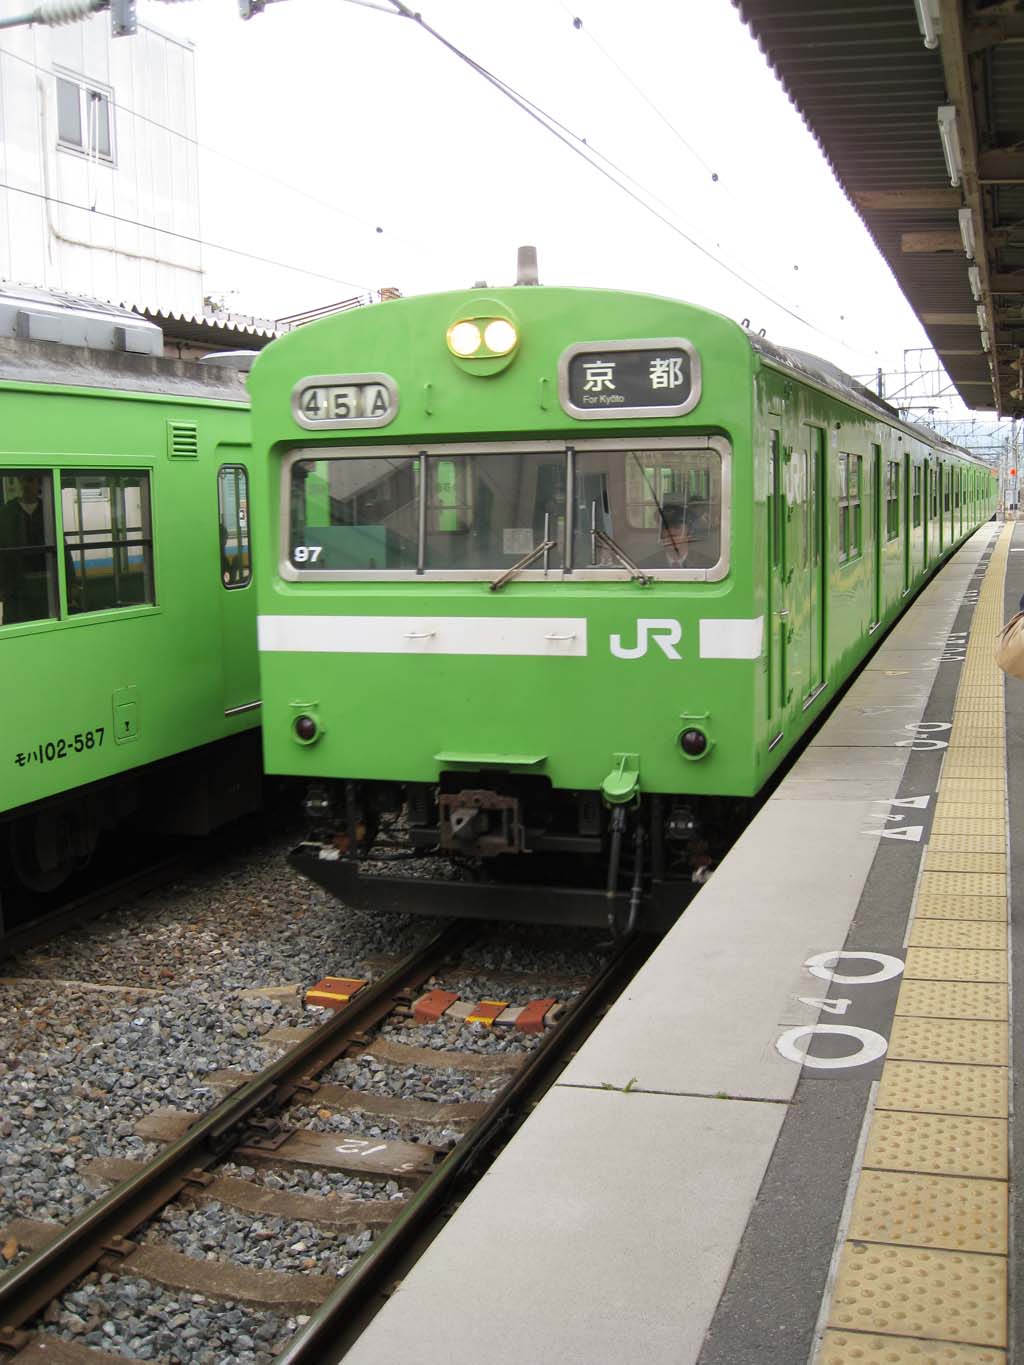 photo,material,free,landscape,picture,stock photo,Creative Commons,JR Nara Line, platform, train, Green, railroad